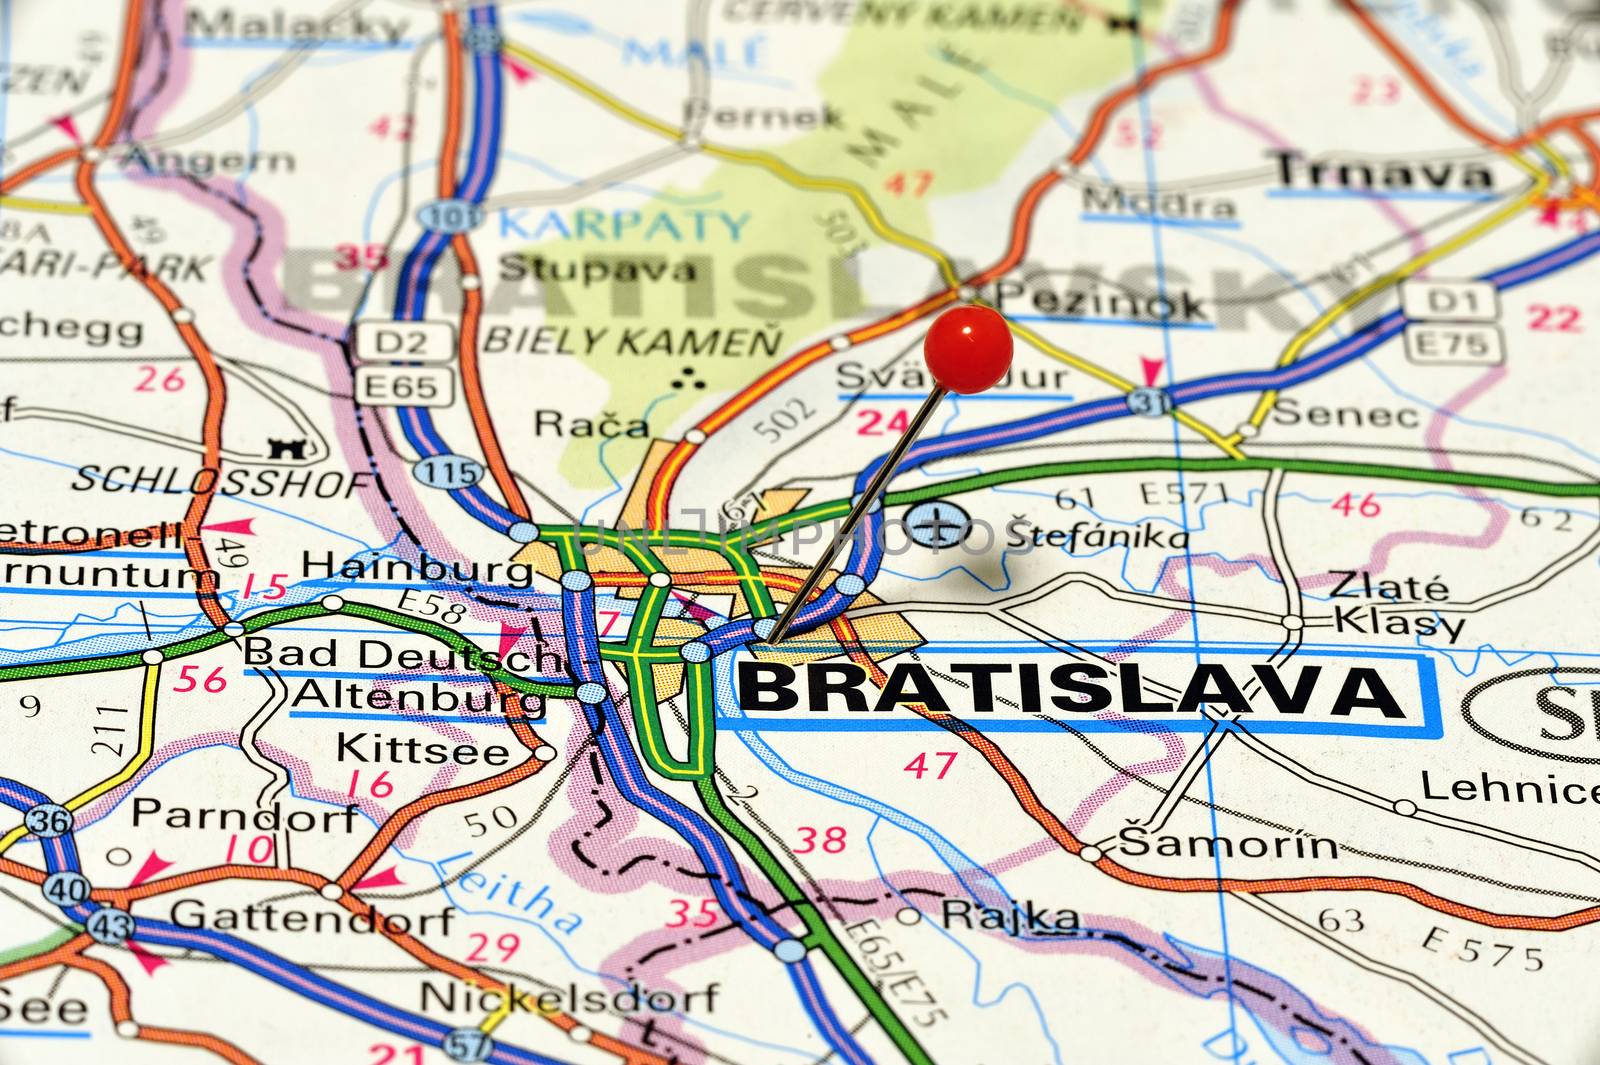 European cities on map series: Bratislava